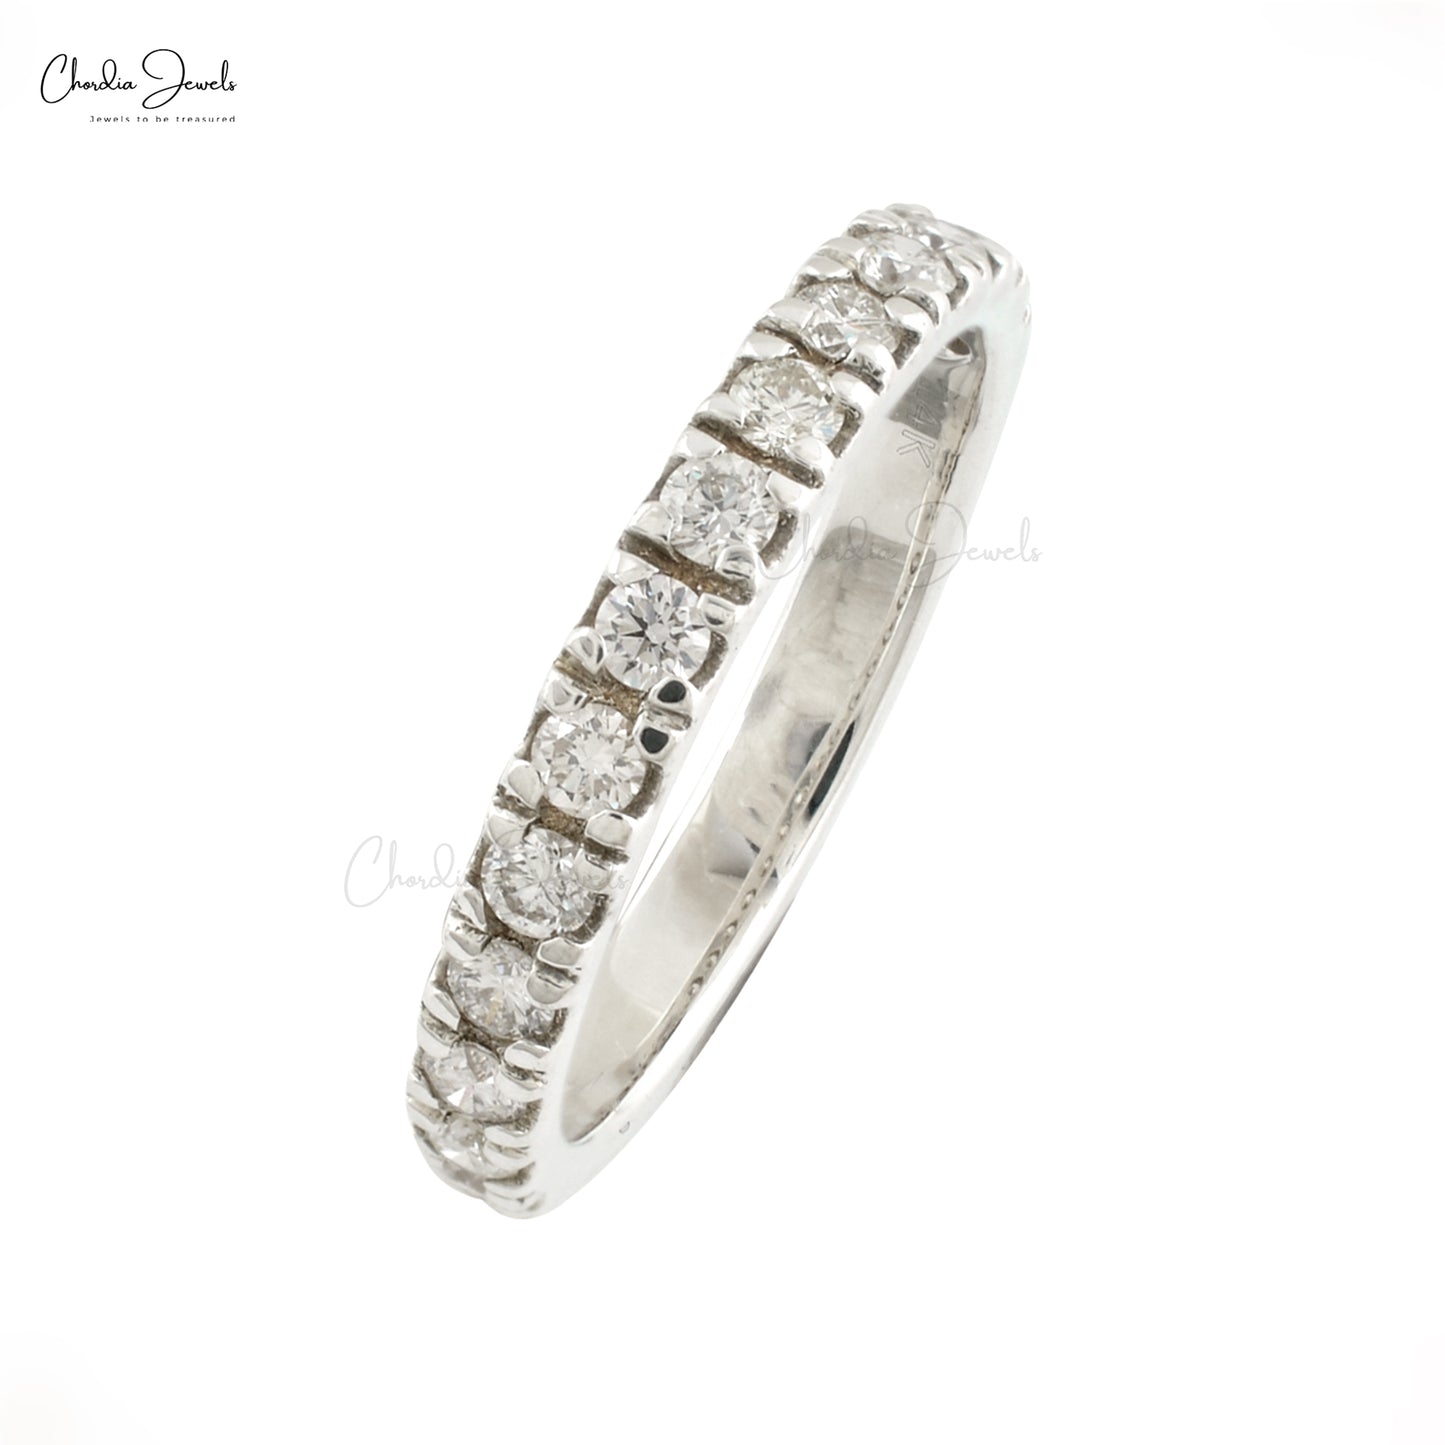 Buy White Diamond Ring